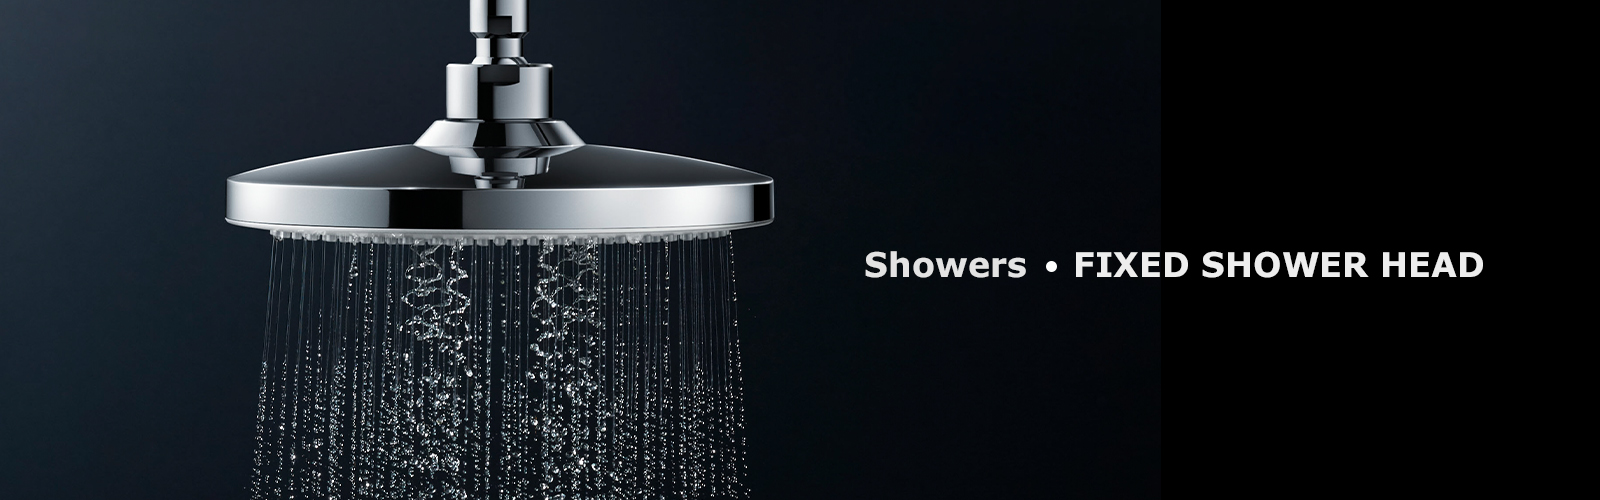 Toto Fixed Shower Heads Rain Head Singapore